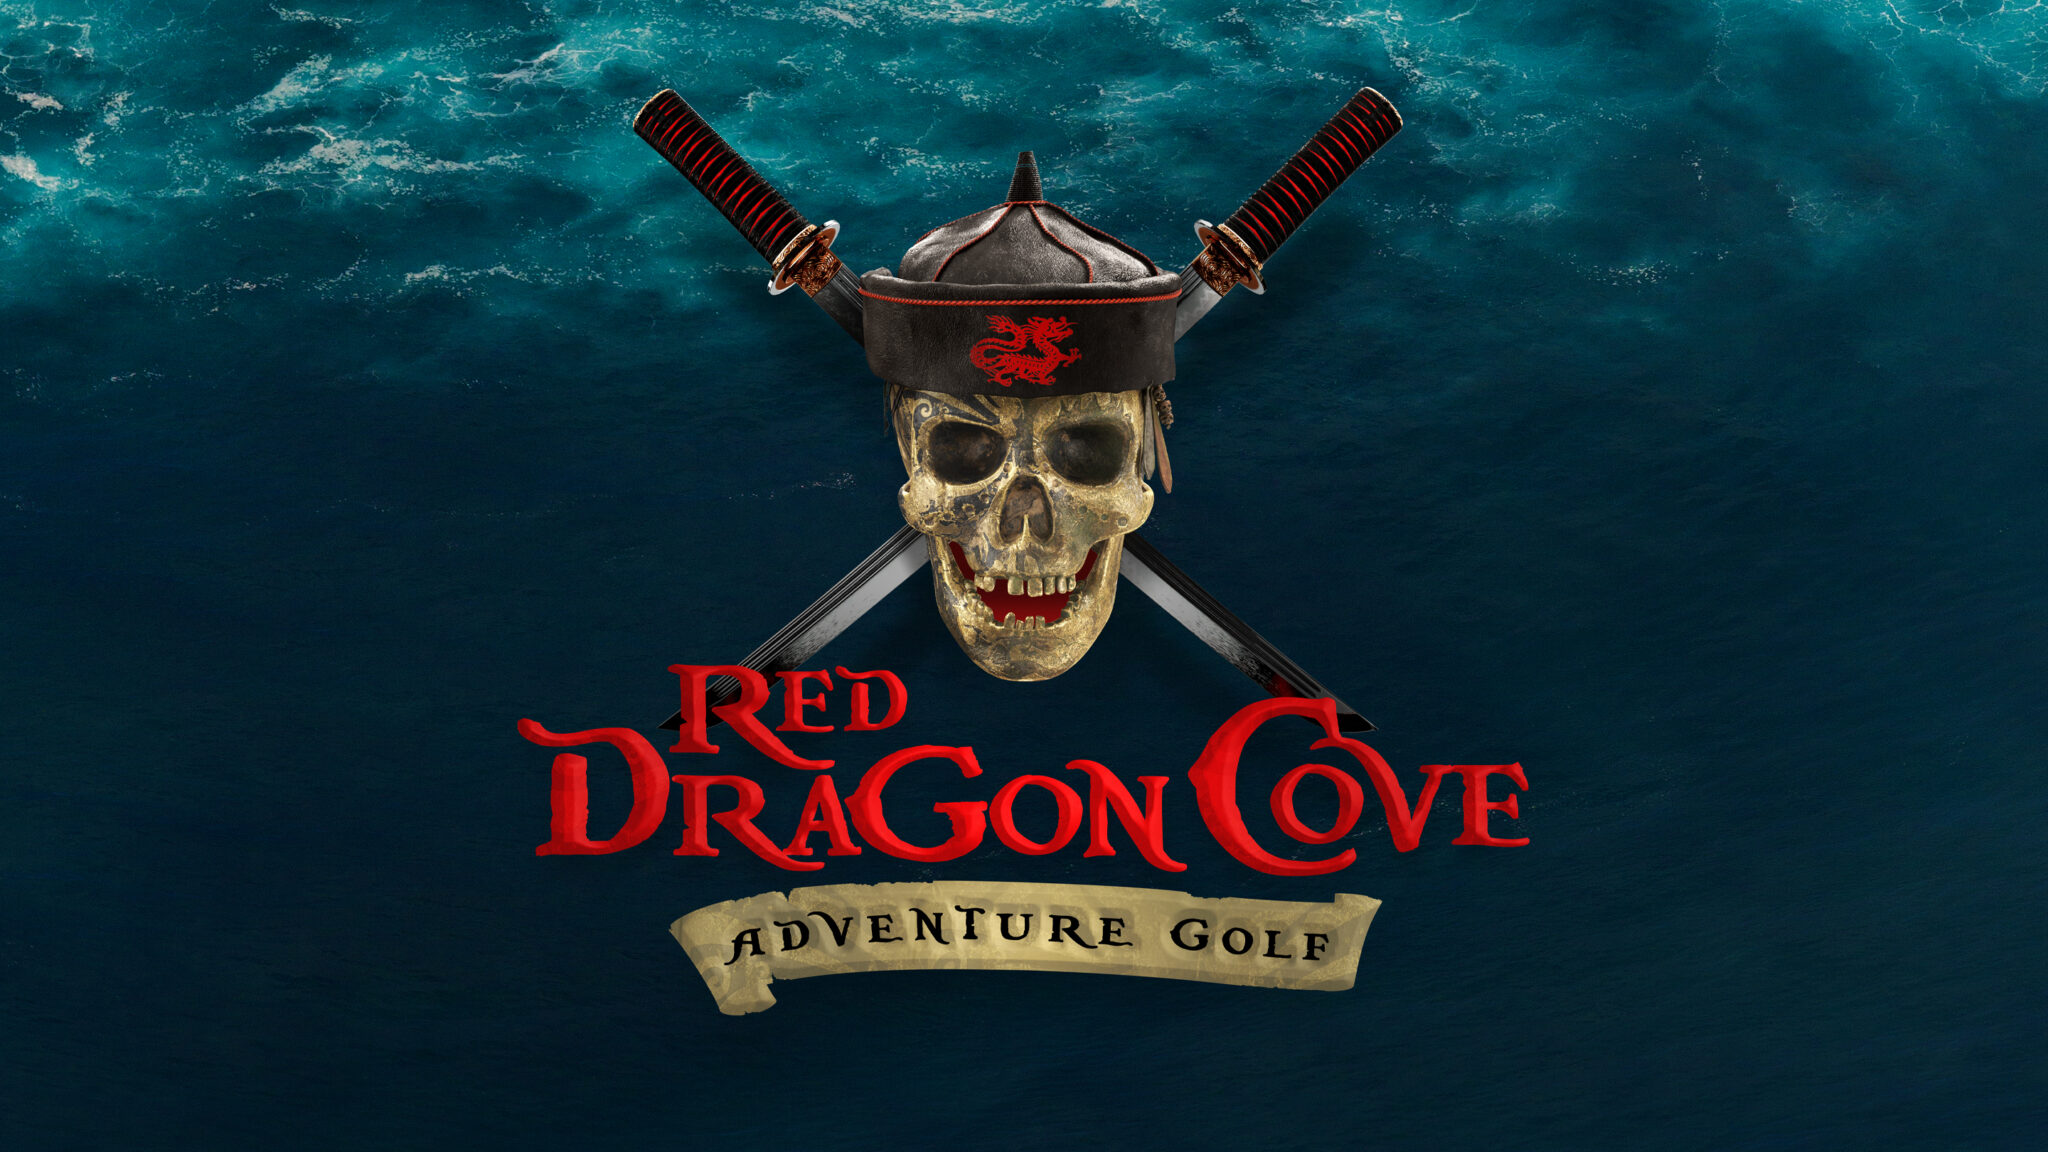 Red Dragon Cove Logo